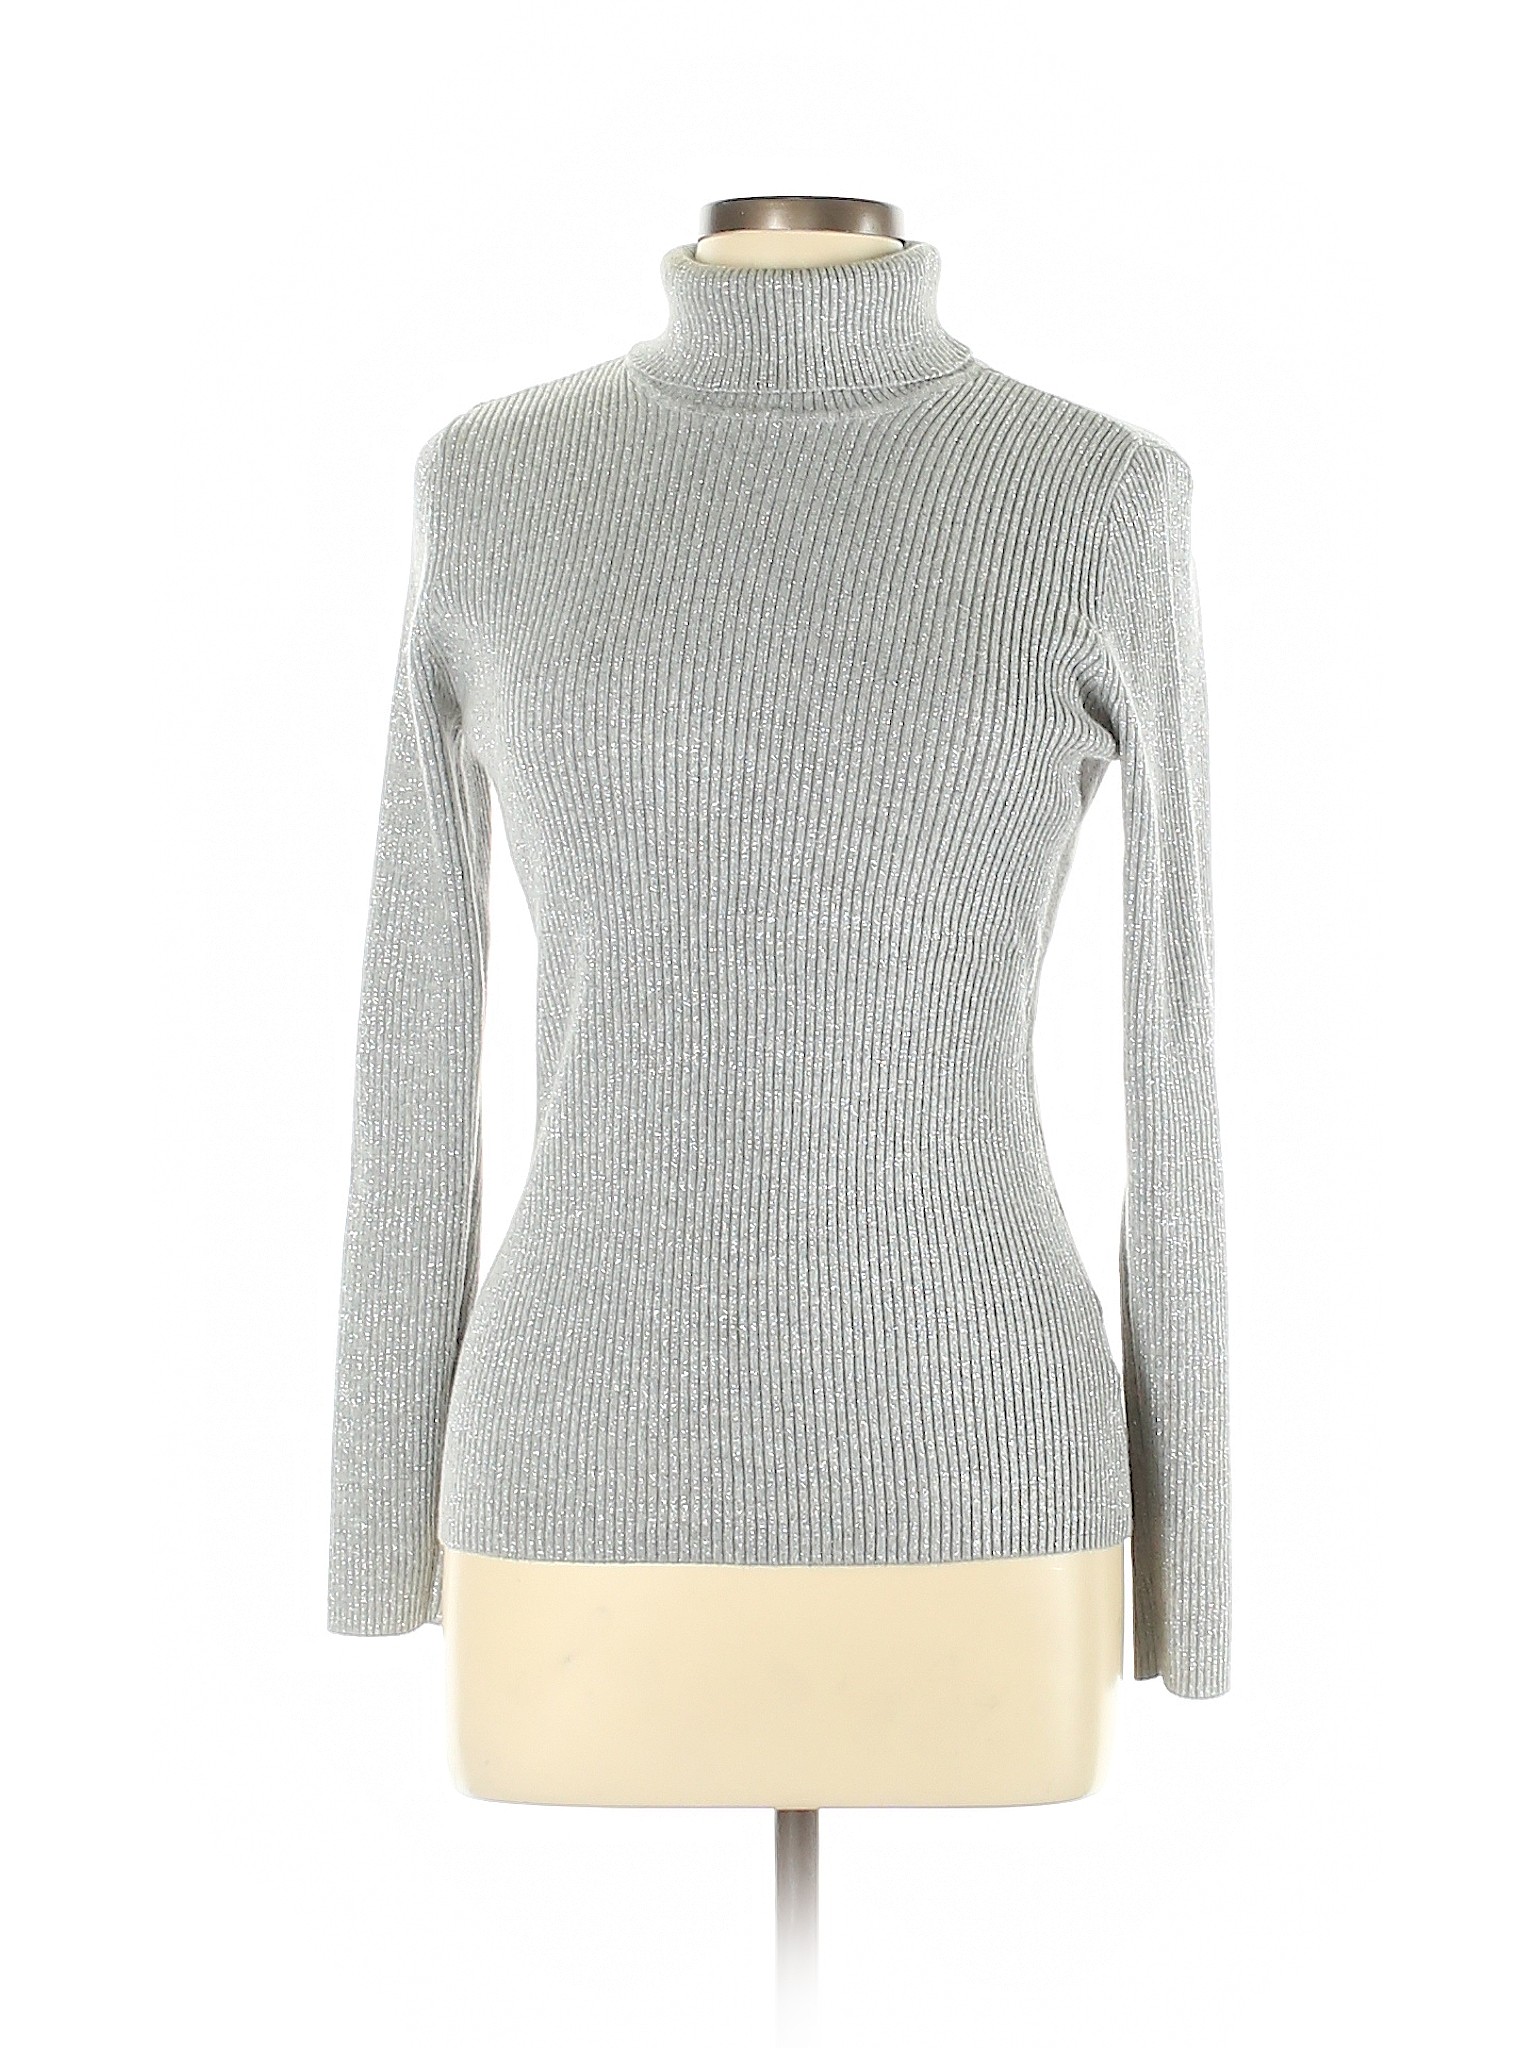 Basic Editions Women Gray Turtleneck Sweater L | eBay